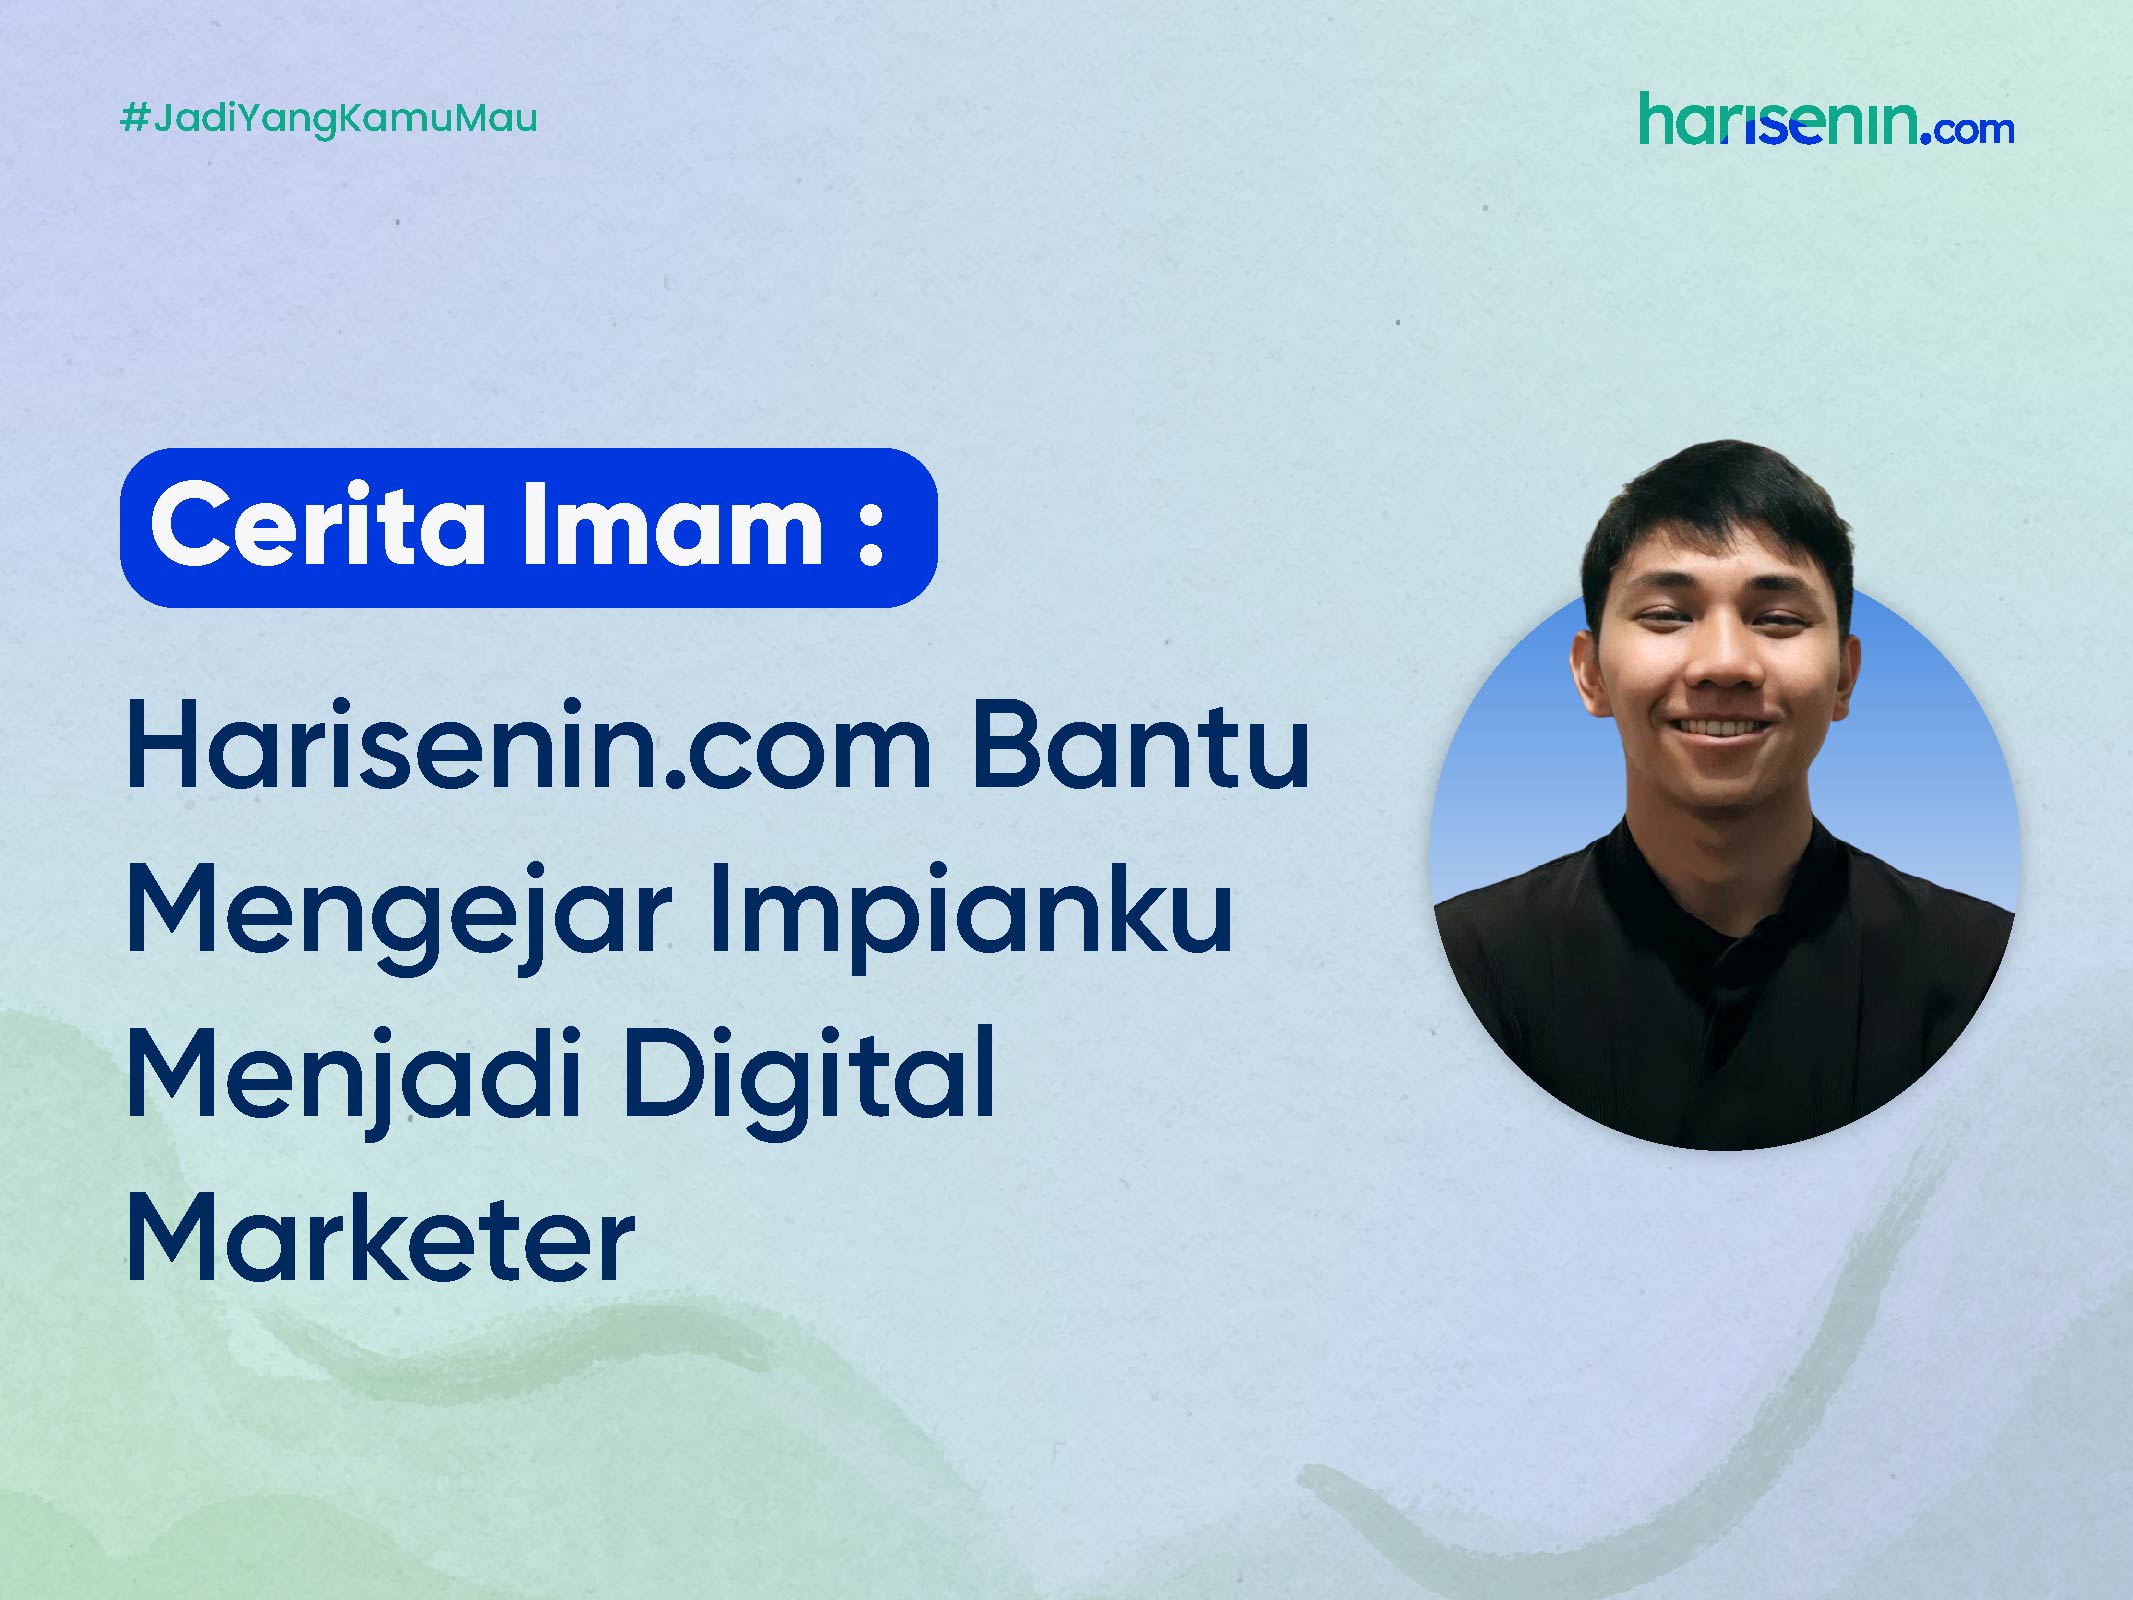 Cerita Imam : Harisenin.com Bantu Mengejar Impianku Menjadi Digital Marketer